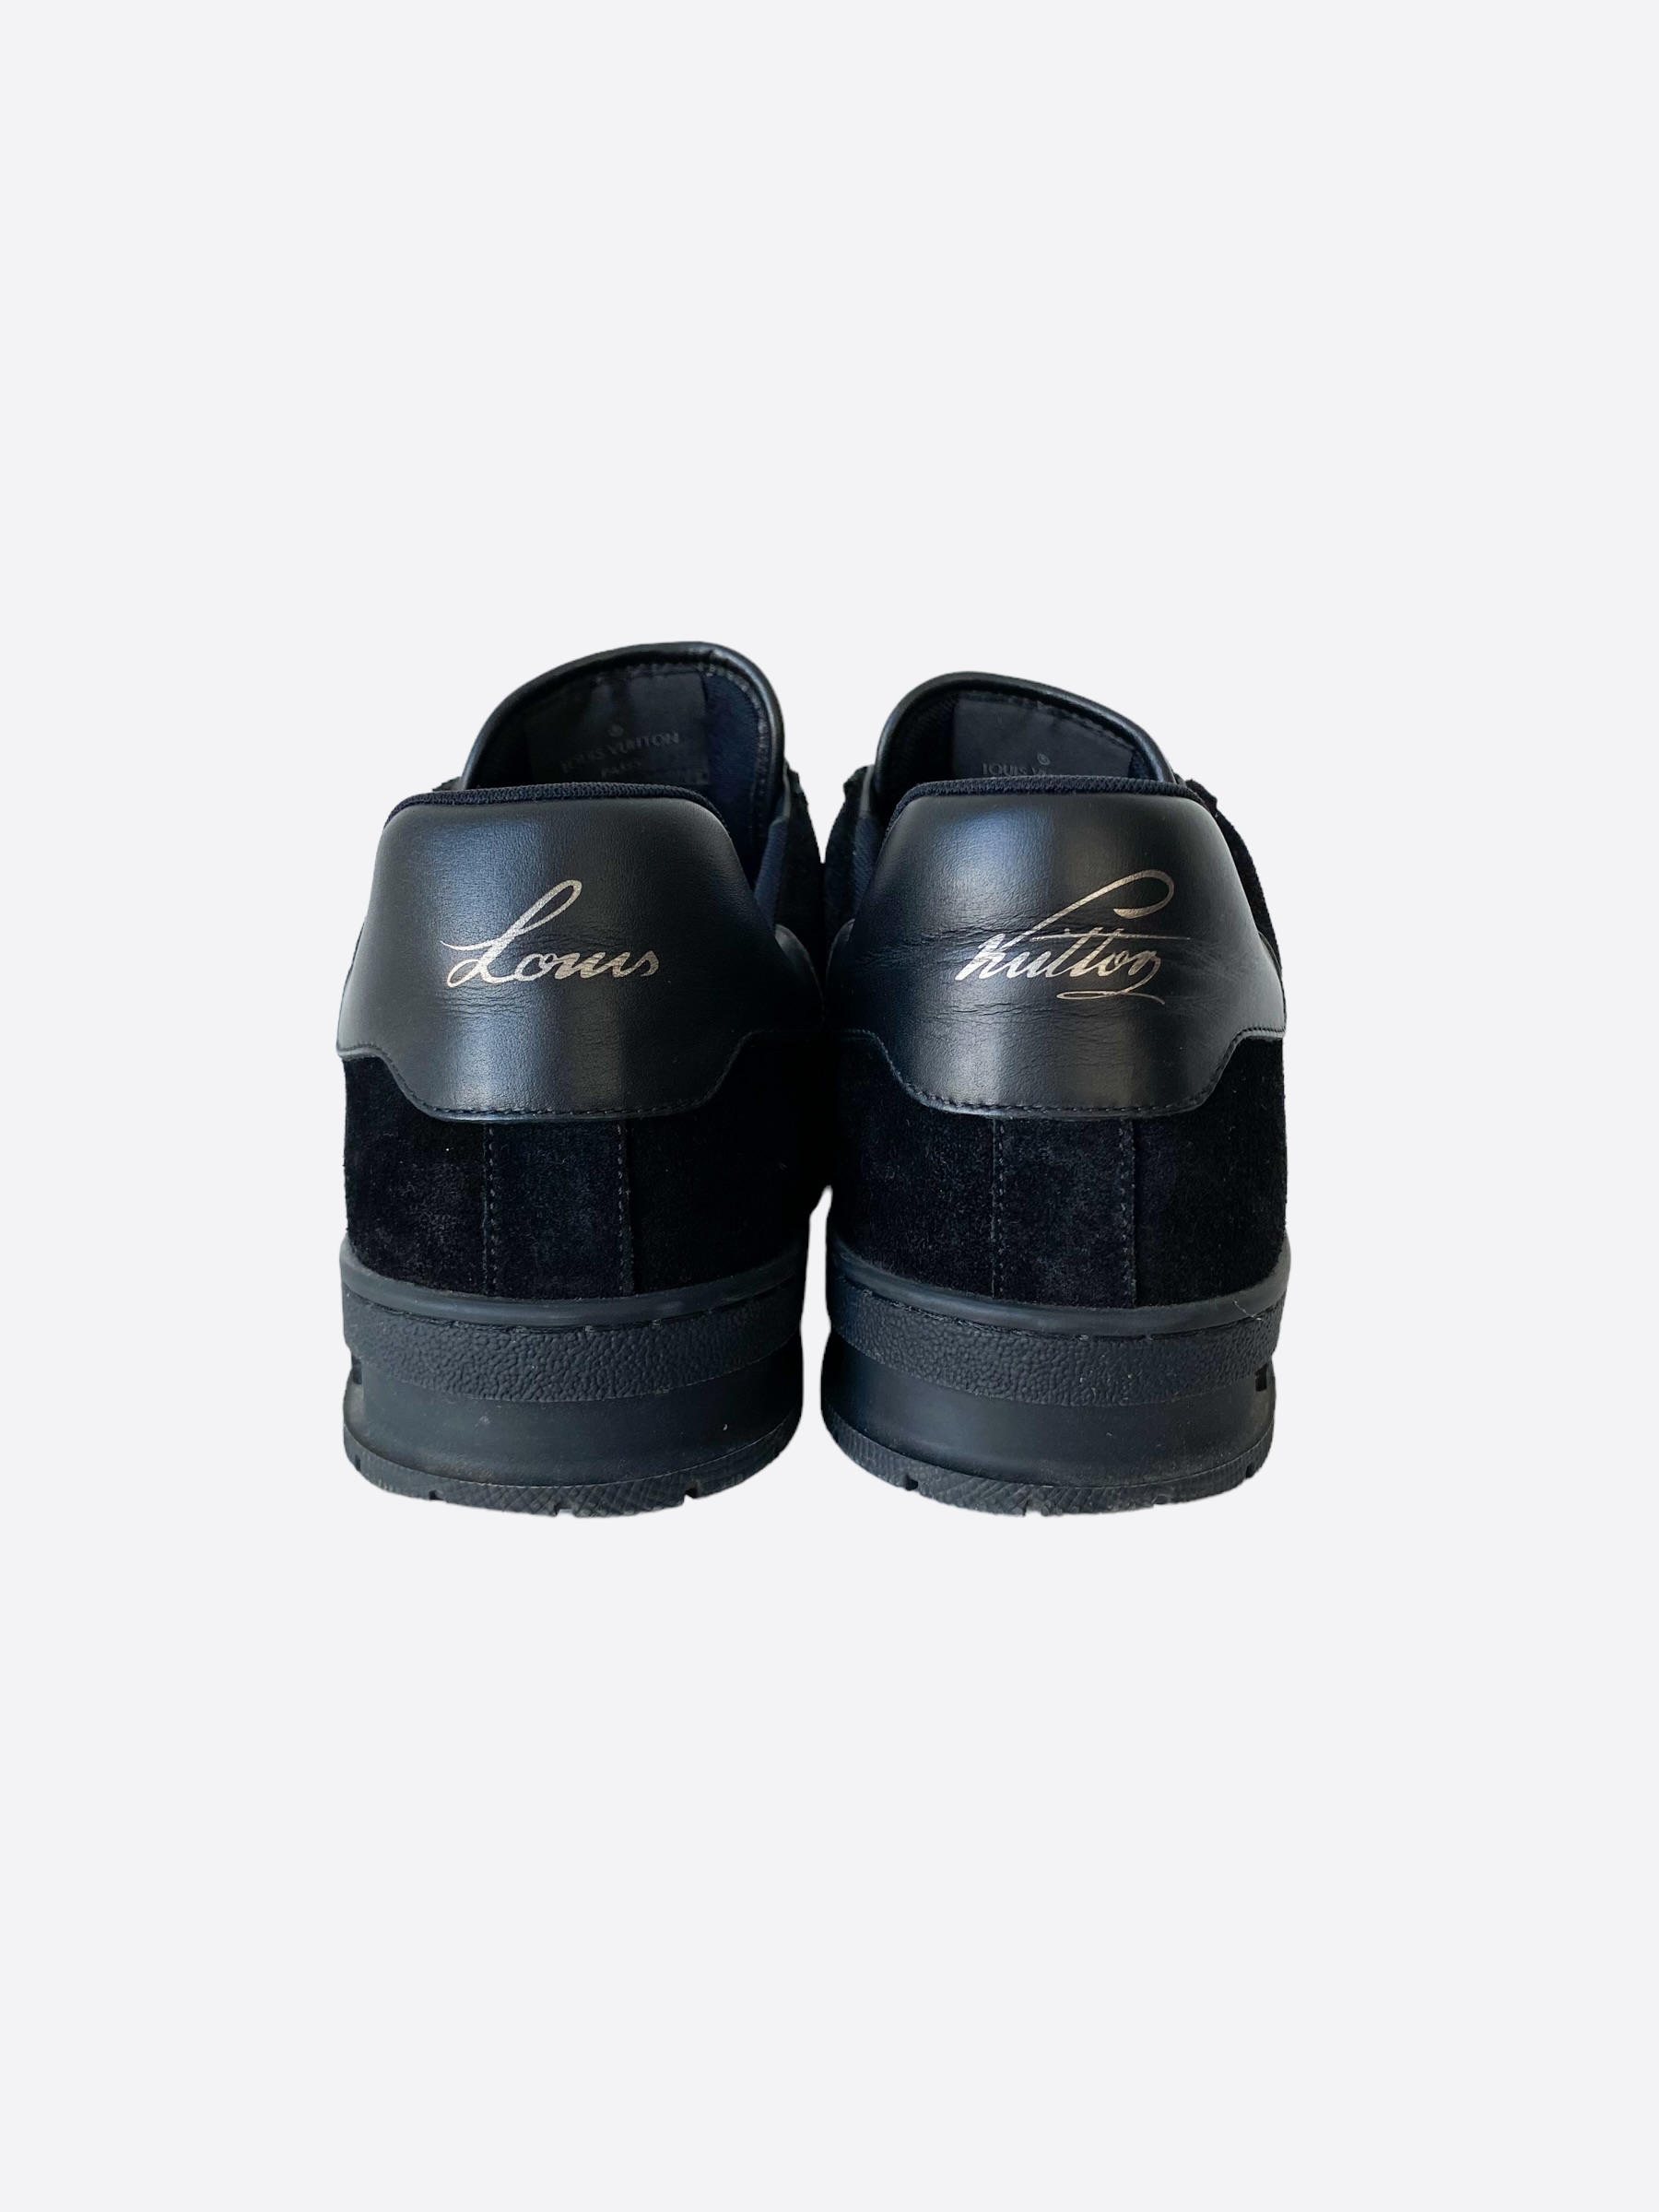 louis vuitton black suede sneakers